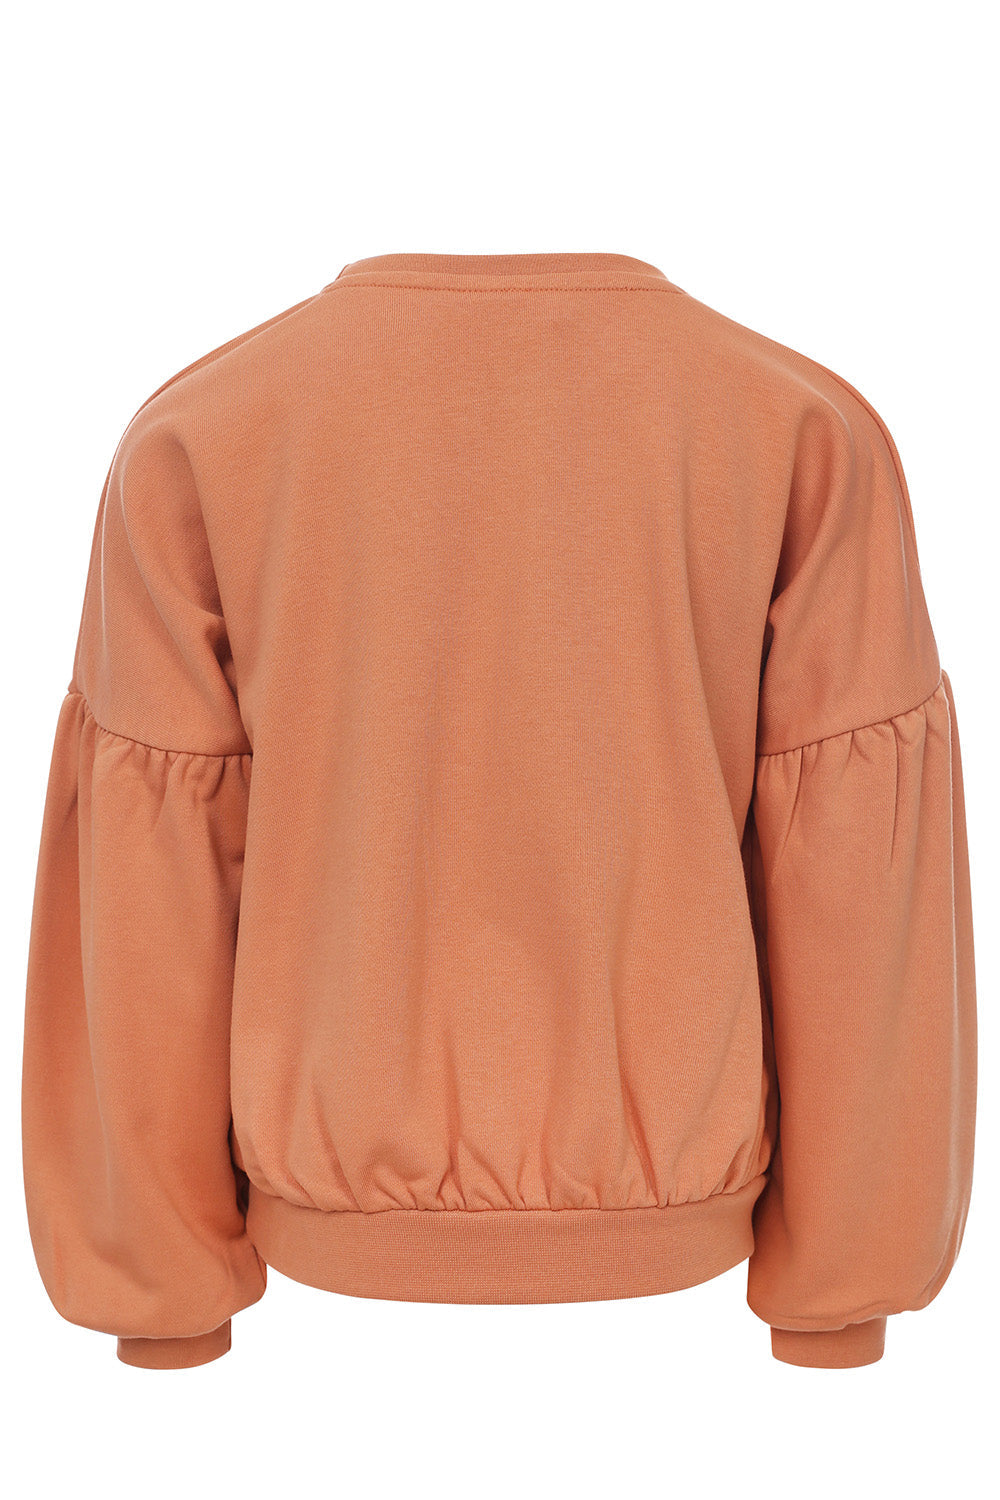 Meisjes Sweater van LOOXS Little in de kleur Soft apricot in maat 128.